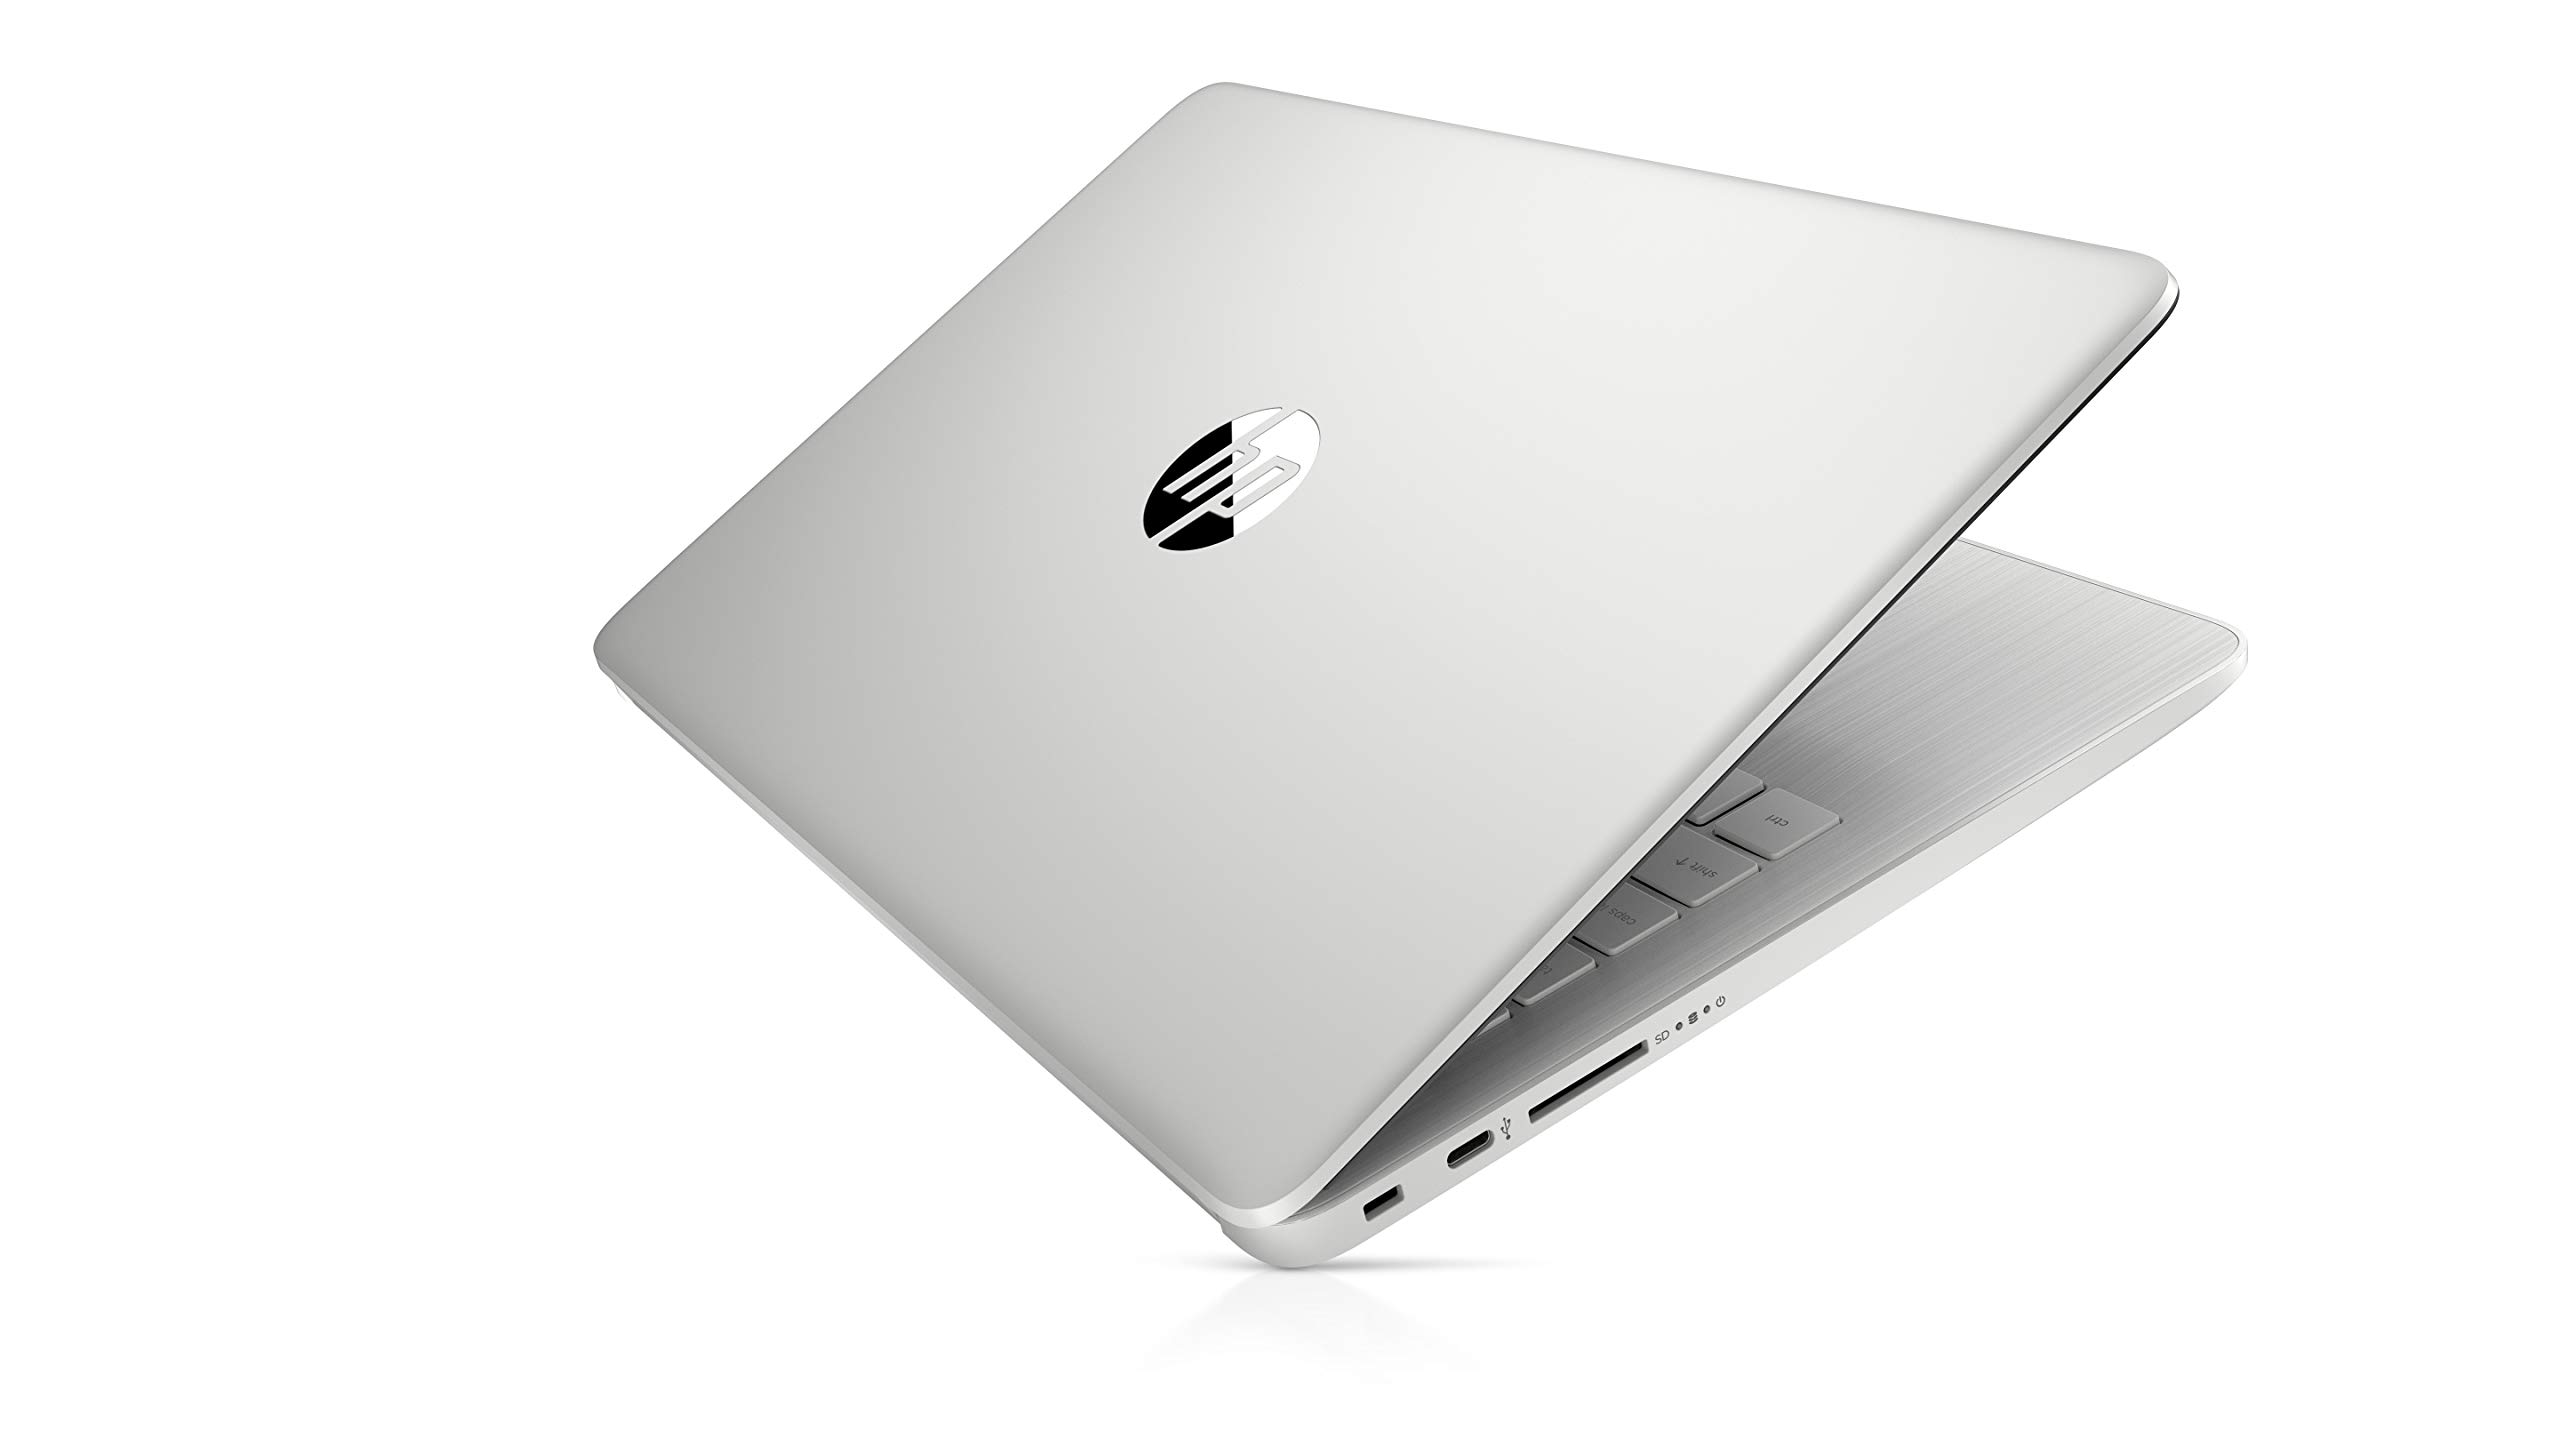 14q-cy0000 Laptop PC